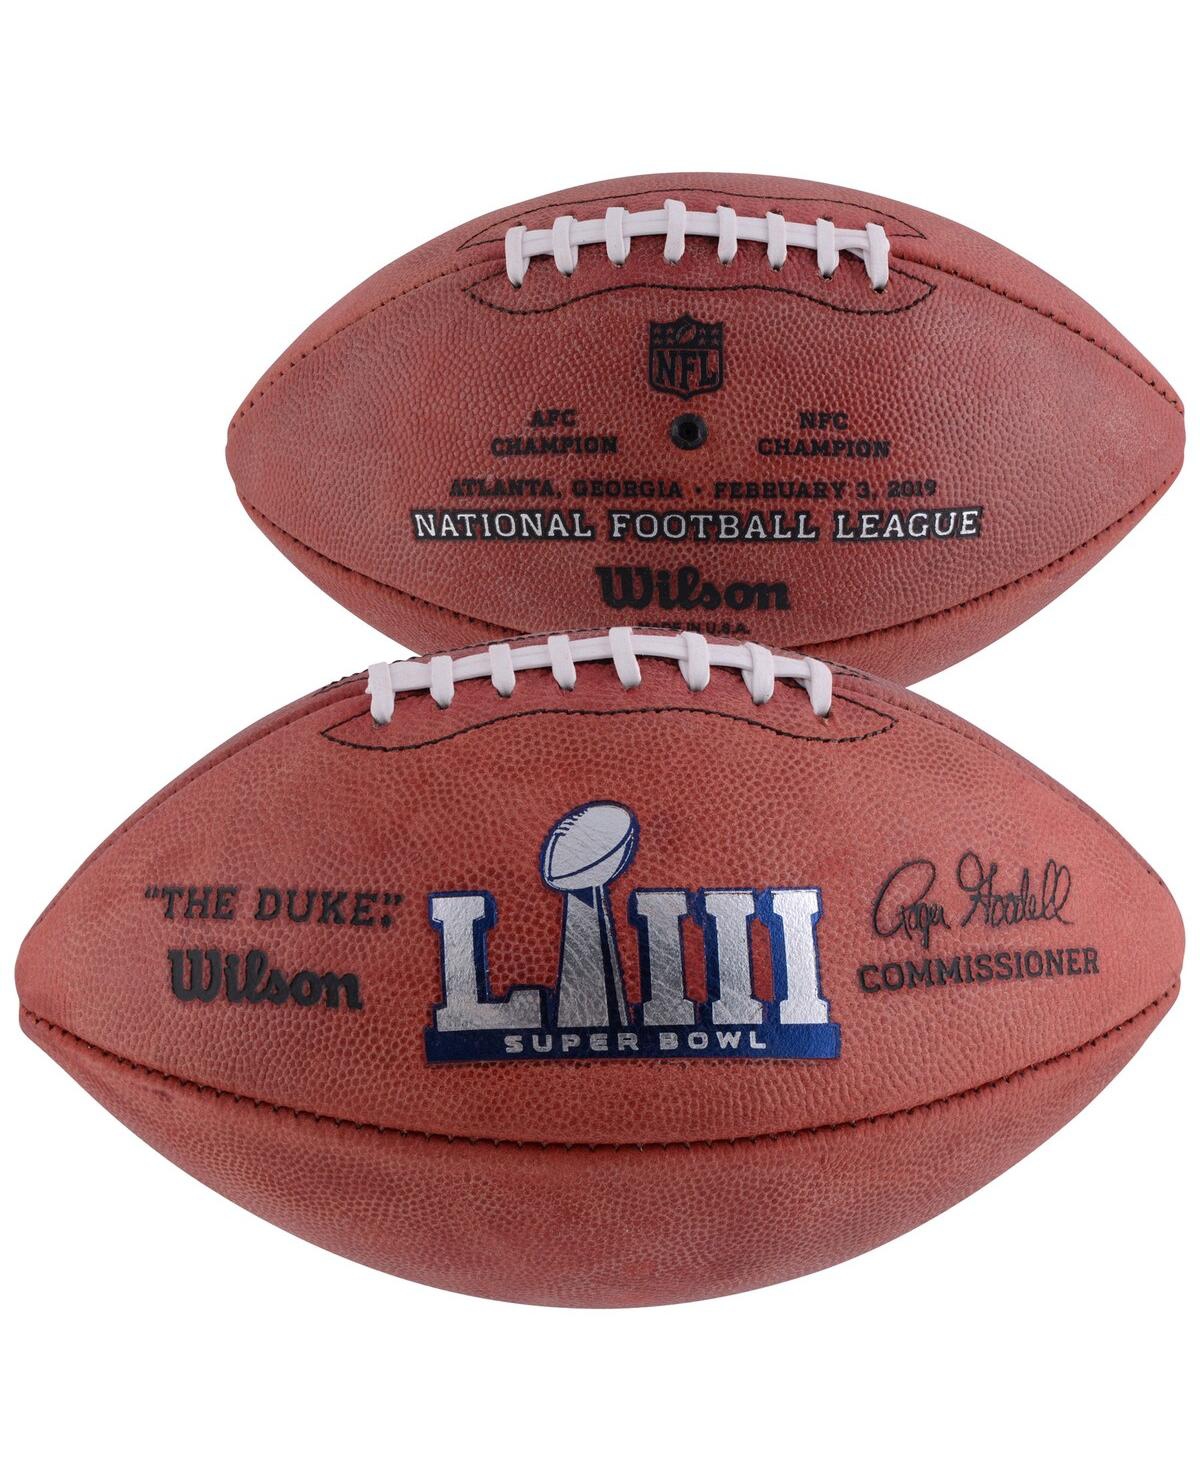 Super Bowl Liii Wilson Official Game Football - Brown